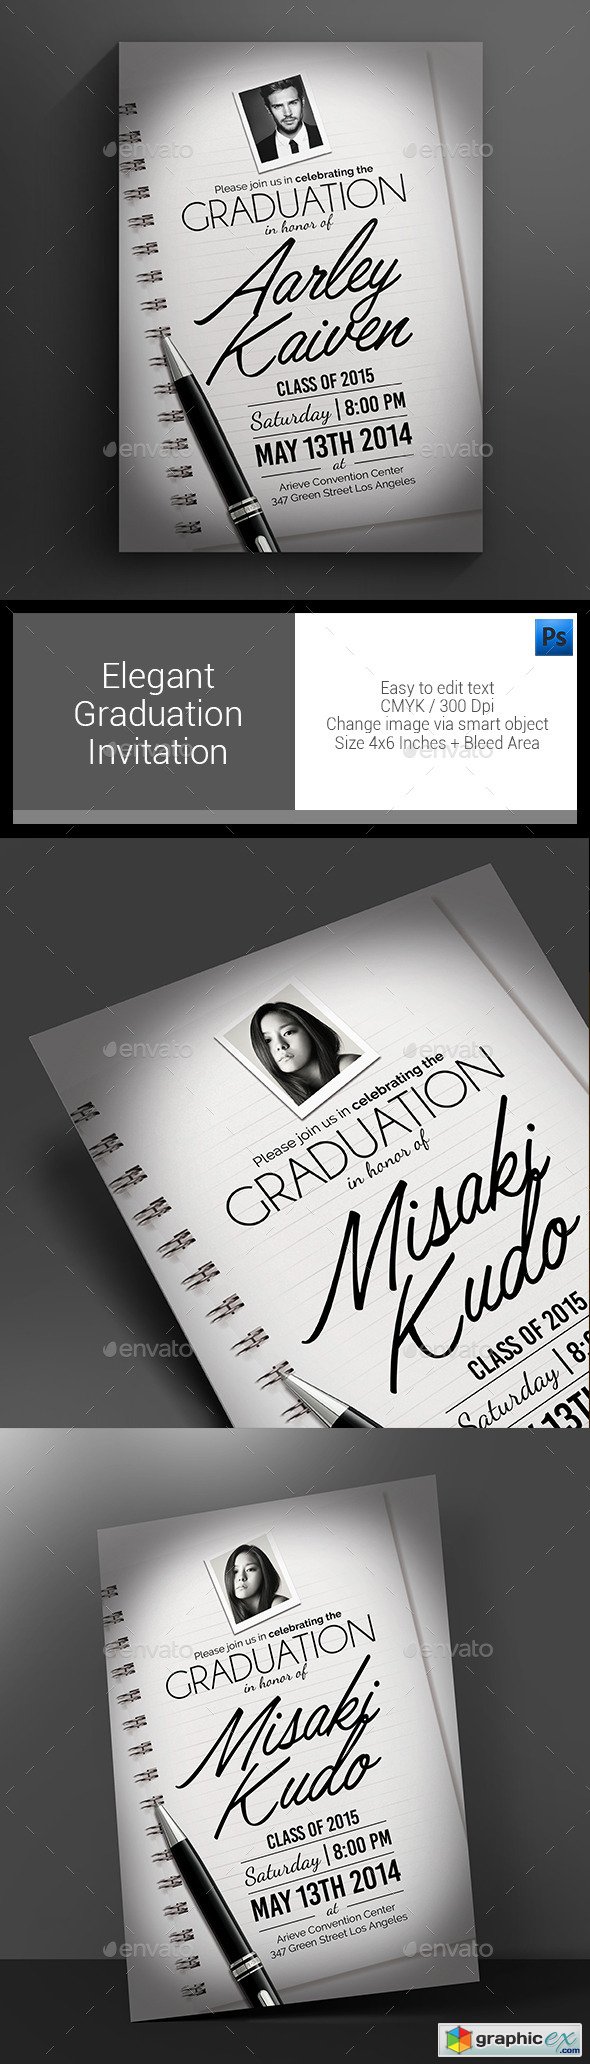 Elegant Graduation Invitation